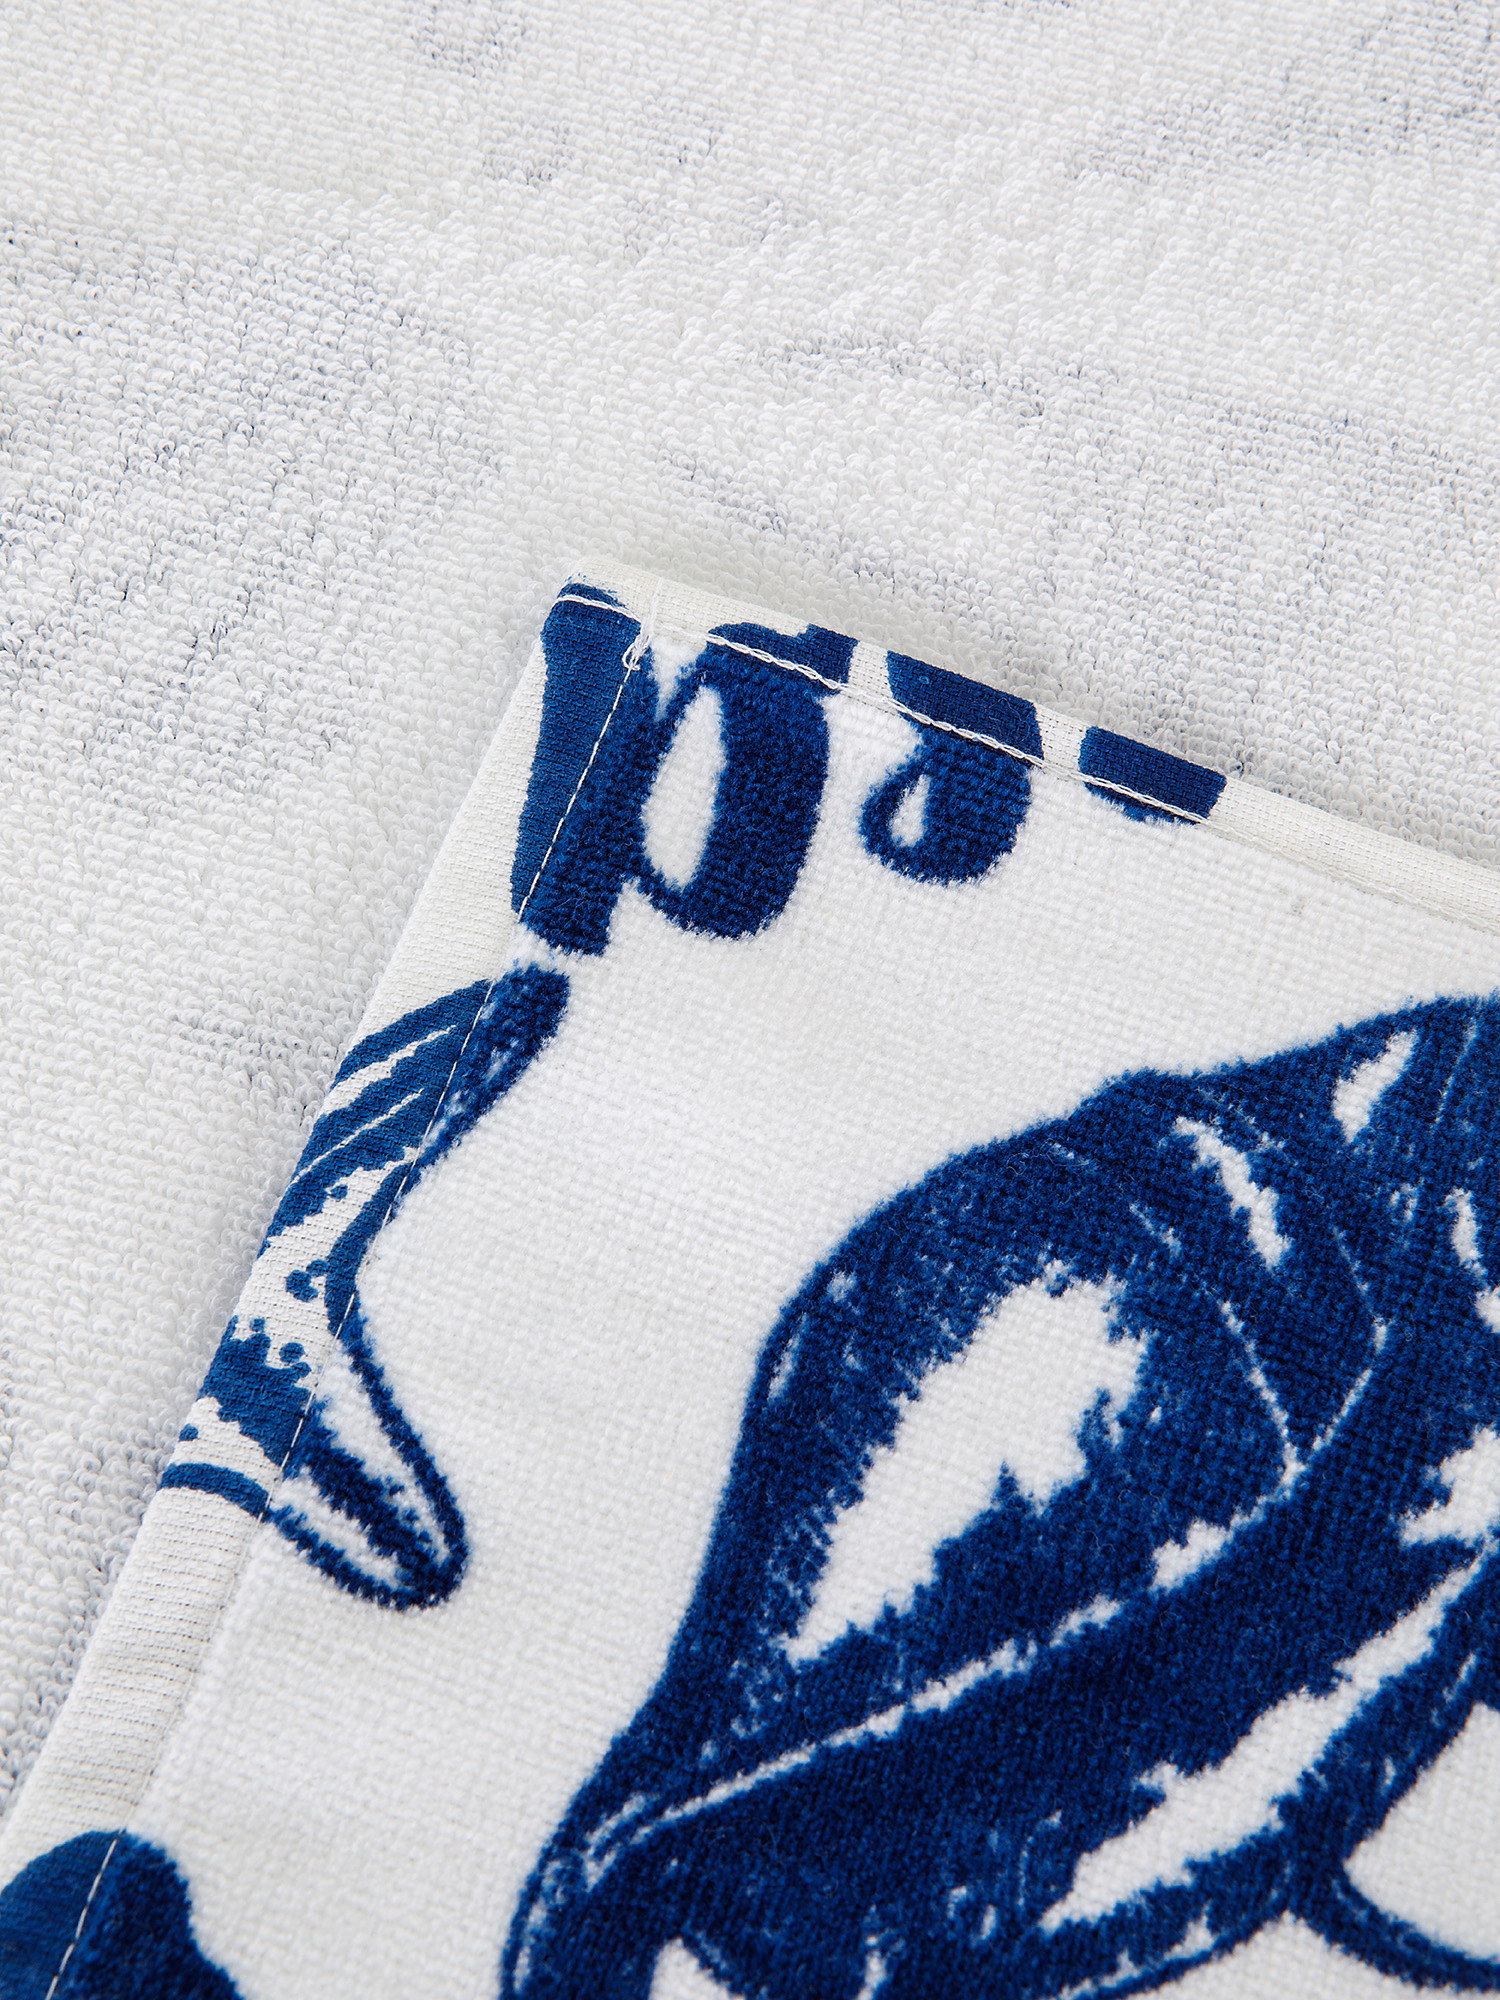 Asciugamano cotone velour motivo marino, Bianco, large